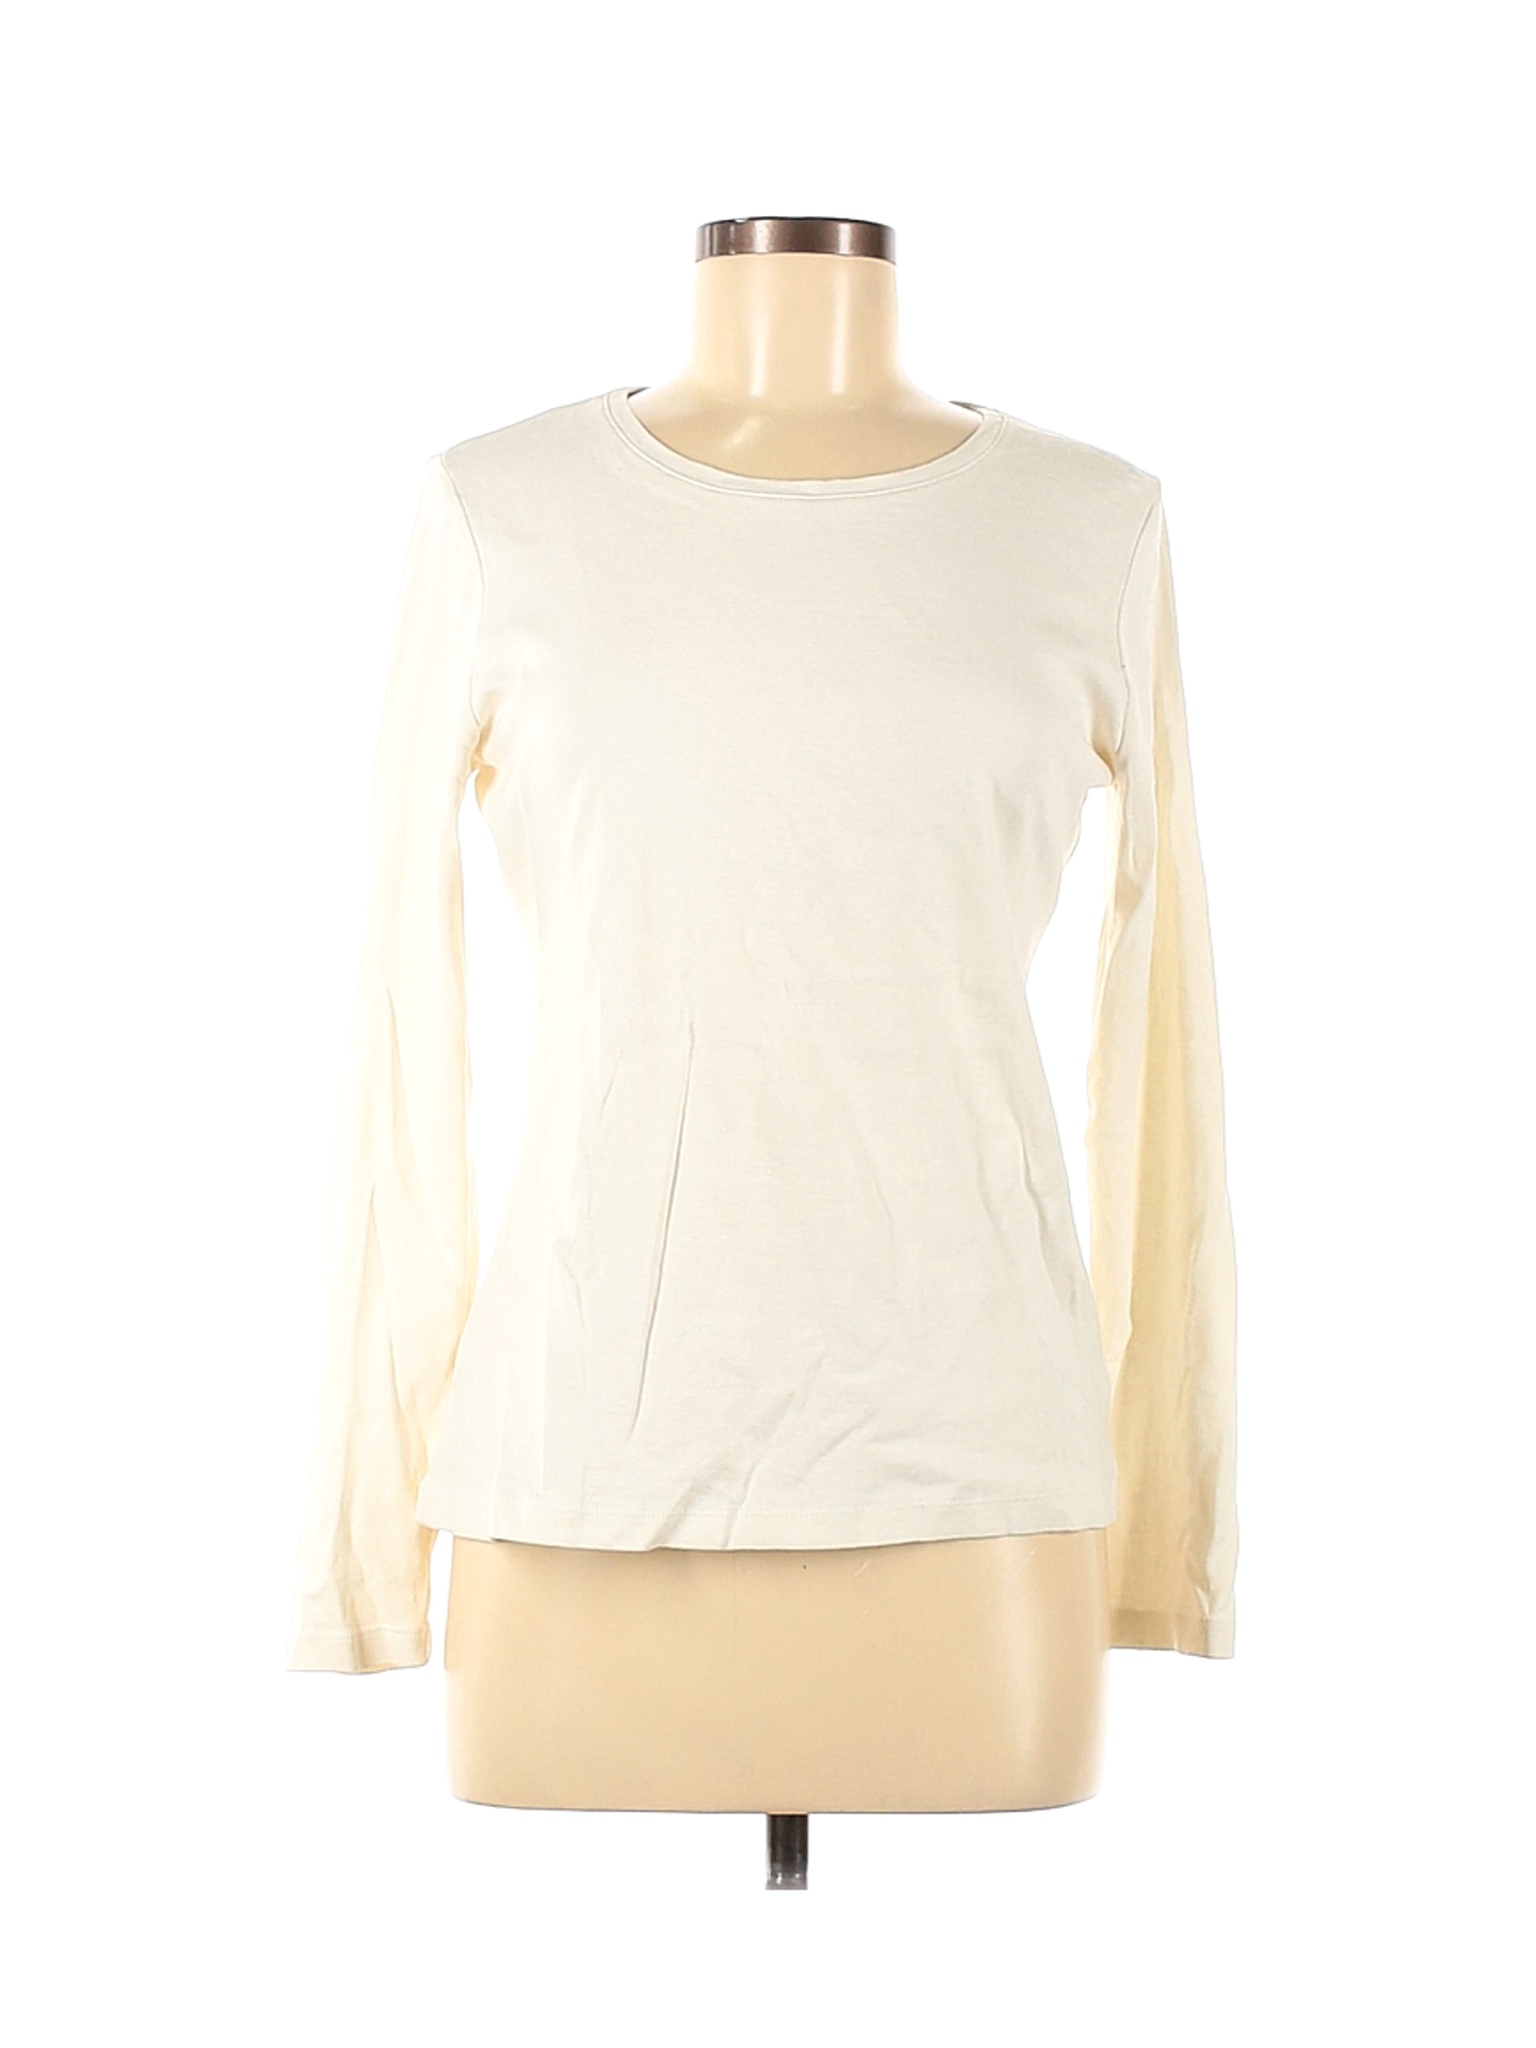 Talbots Outlet Women Ivory Long Sleeve T-Shirt M | eBay